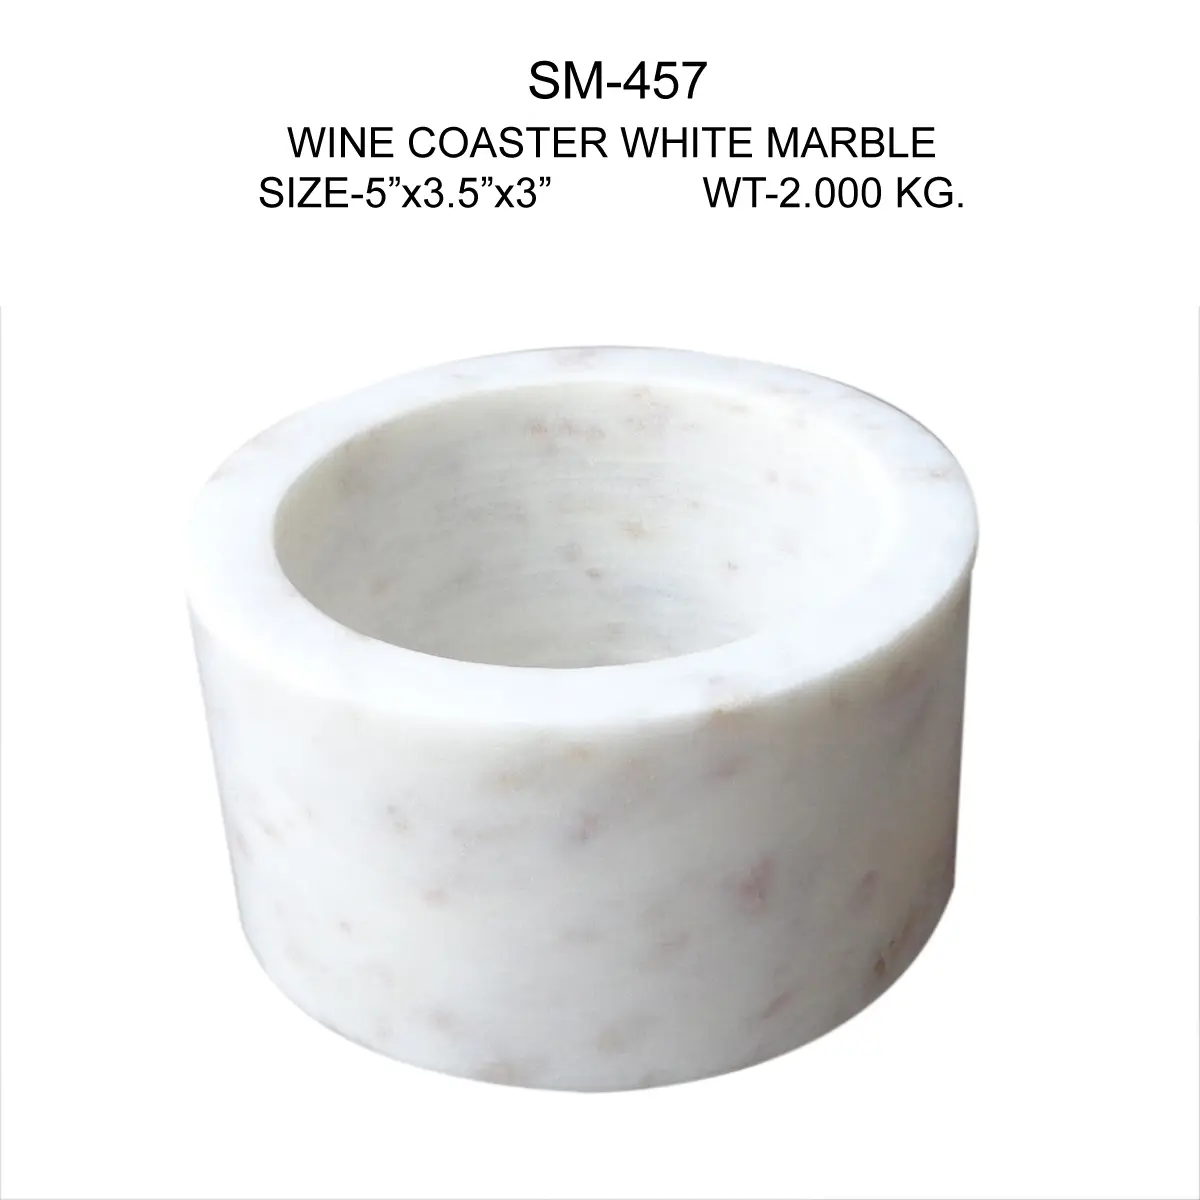 WINE COASTER WHITE MARBLE